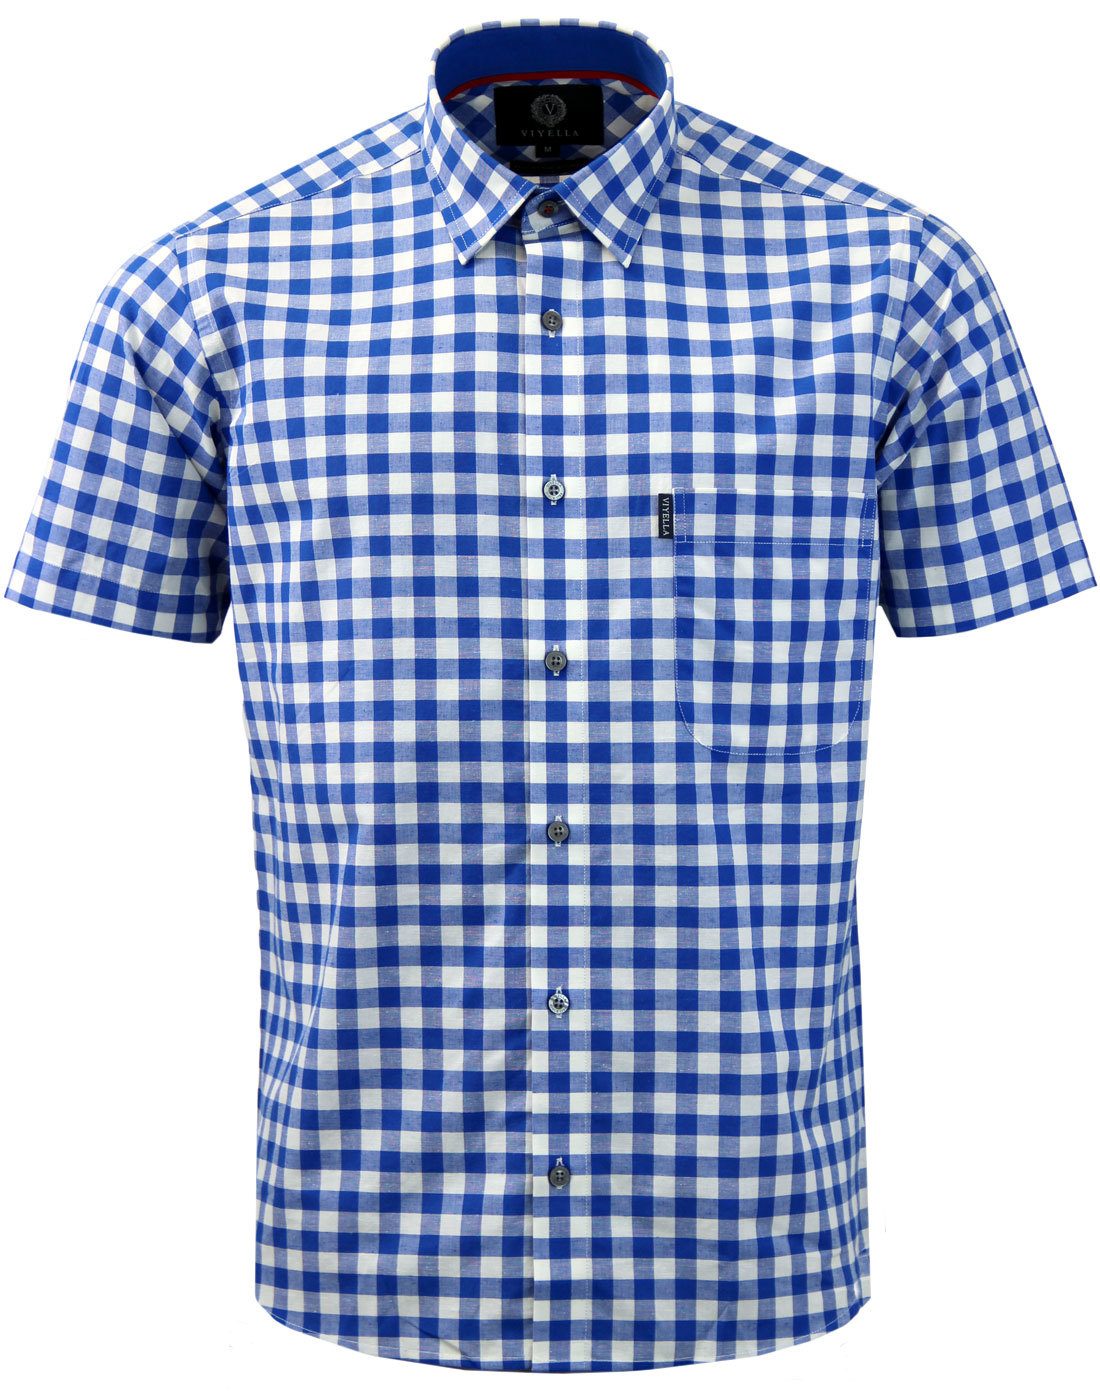 VIYELLA Retro Mod Short Sleeve Cotton Linen Gingham Check Shirt